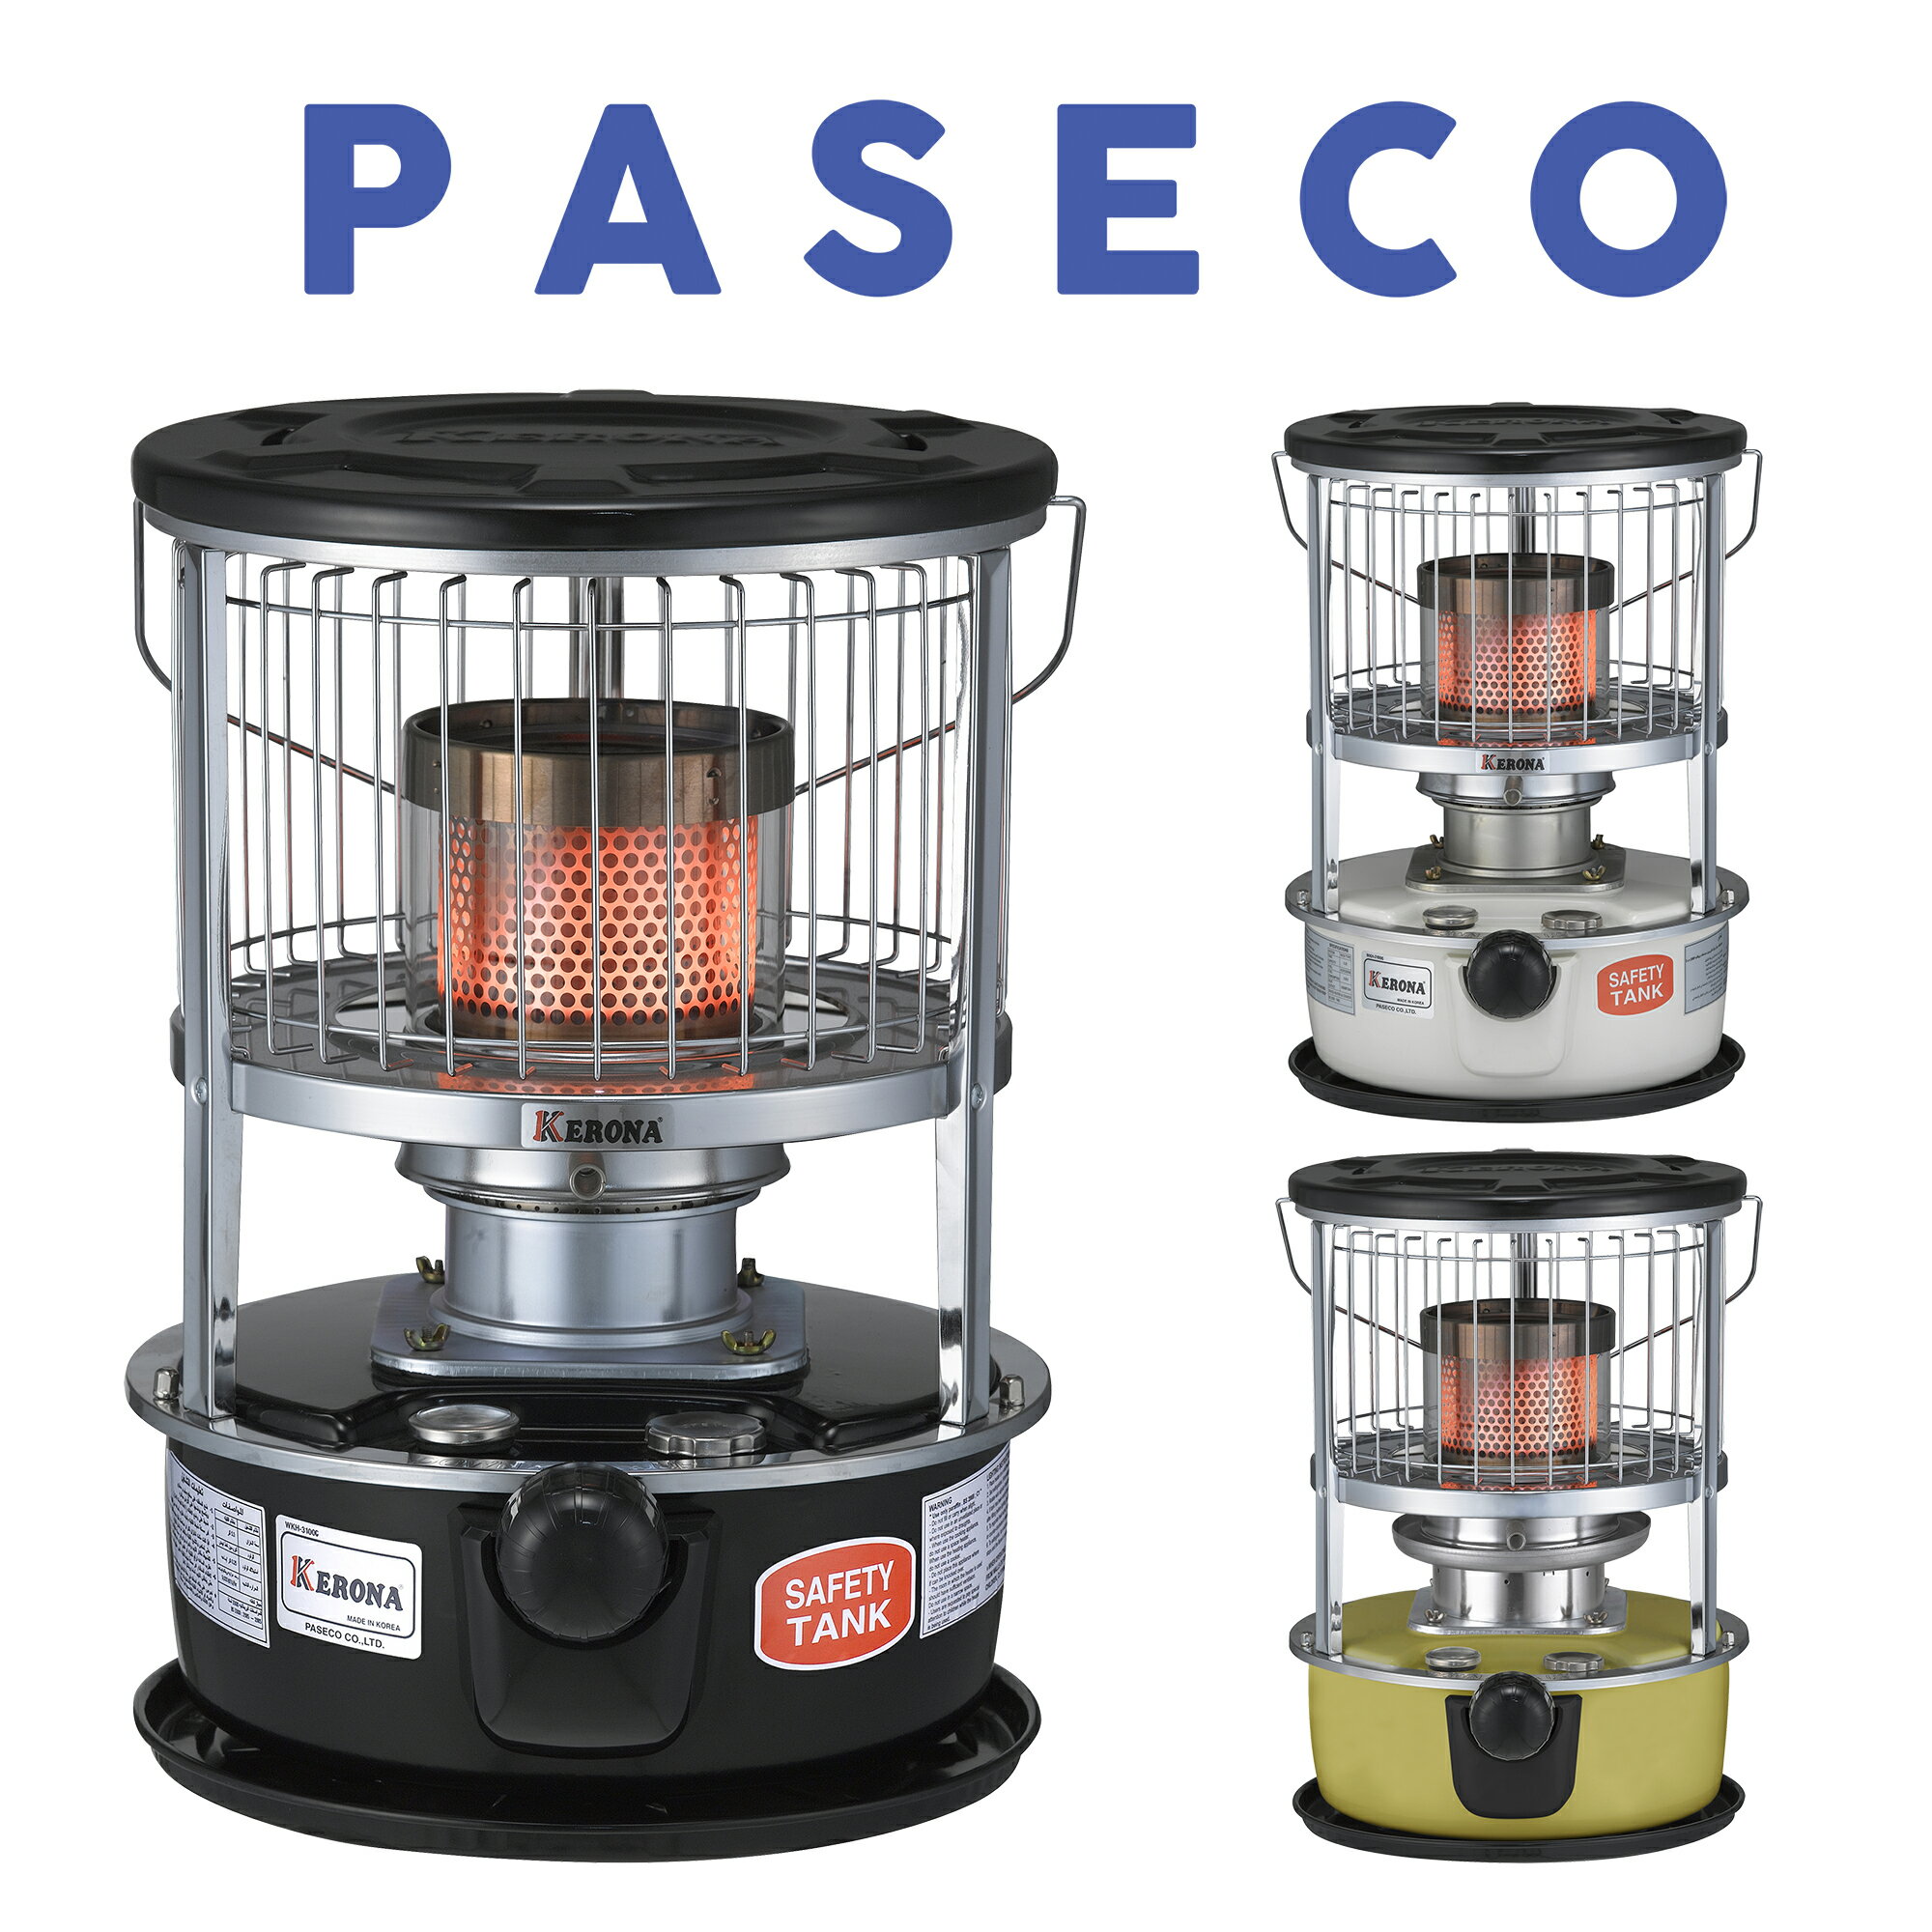 PASECO WKH-3100G (替芯付き！) パセコストーブ | irai.co.id